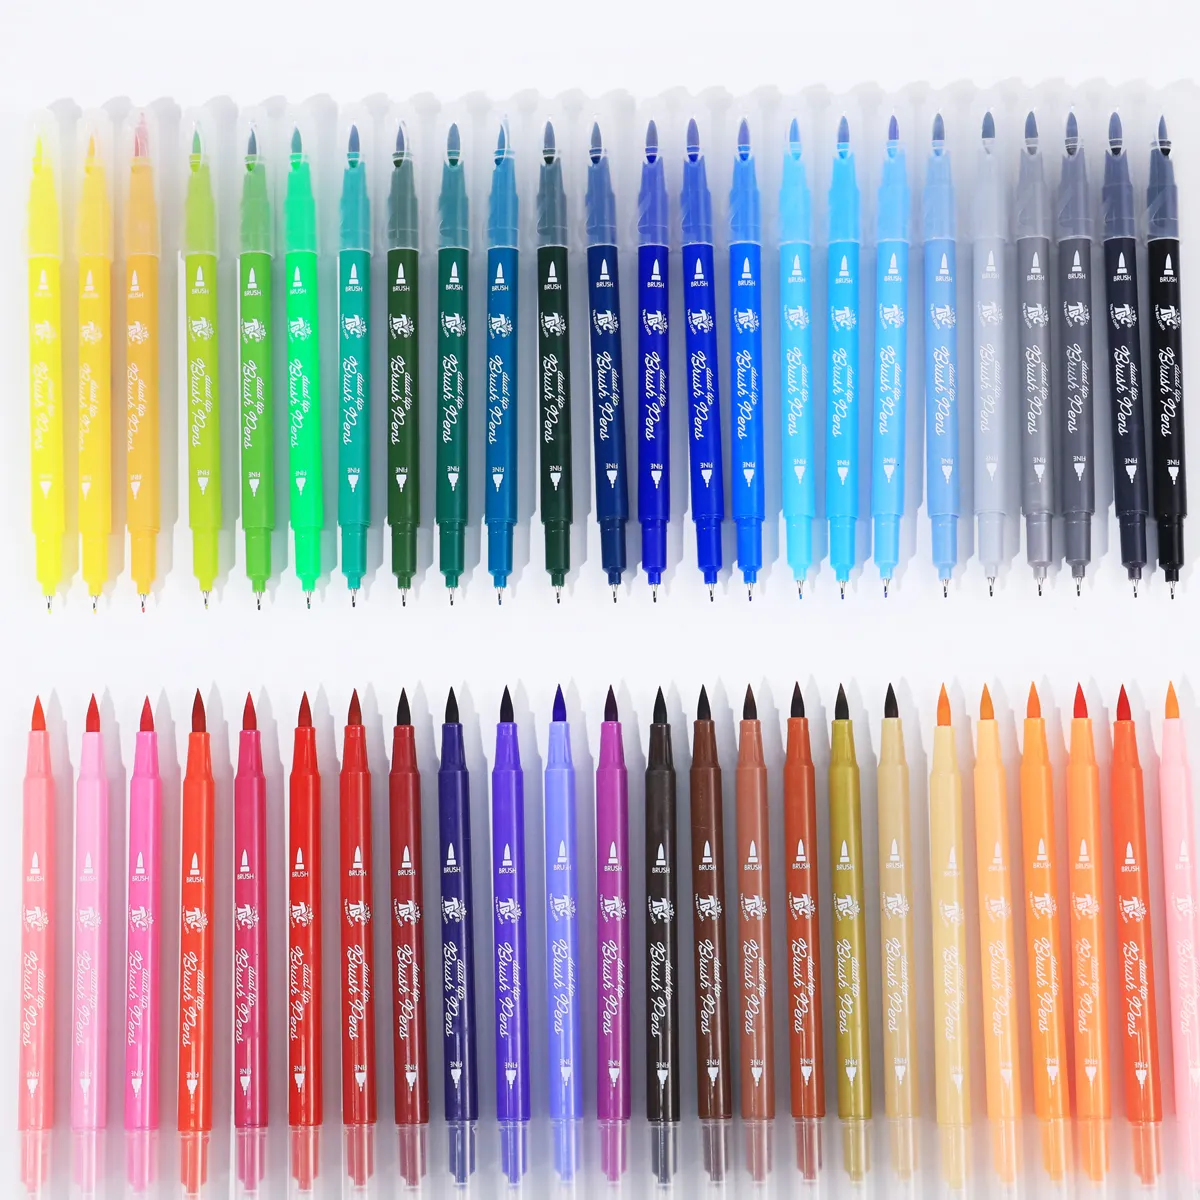 2021 Hot sale Hot Sale Set of 48 Colors Dual Tip Brush Pens Art Sketch Drawing Marker Pen